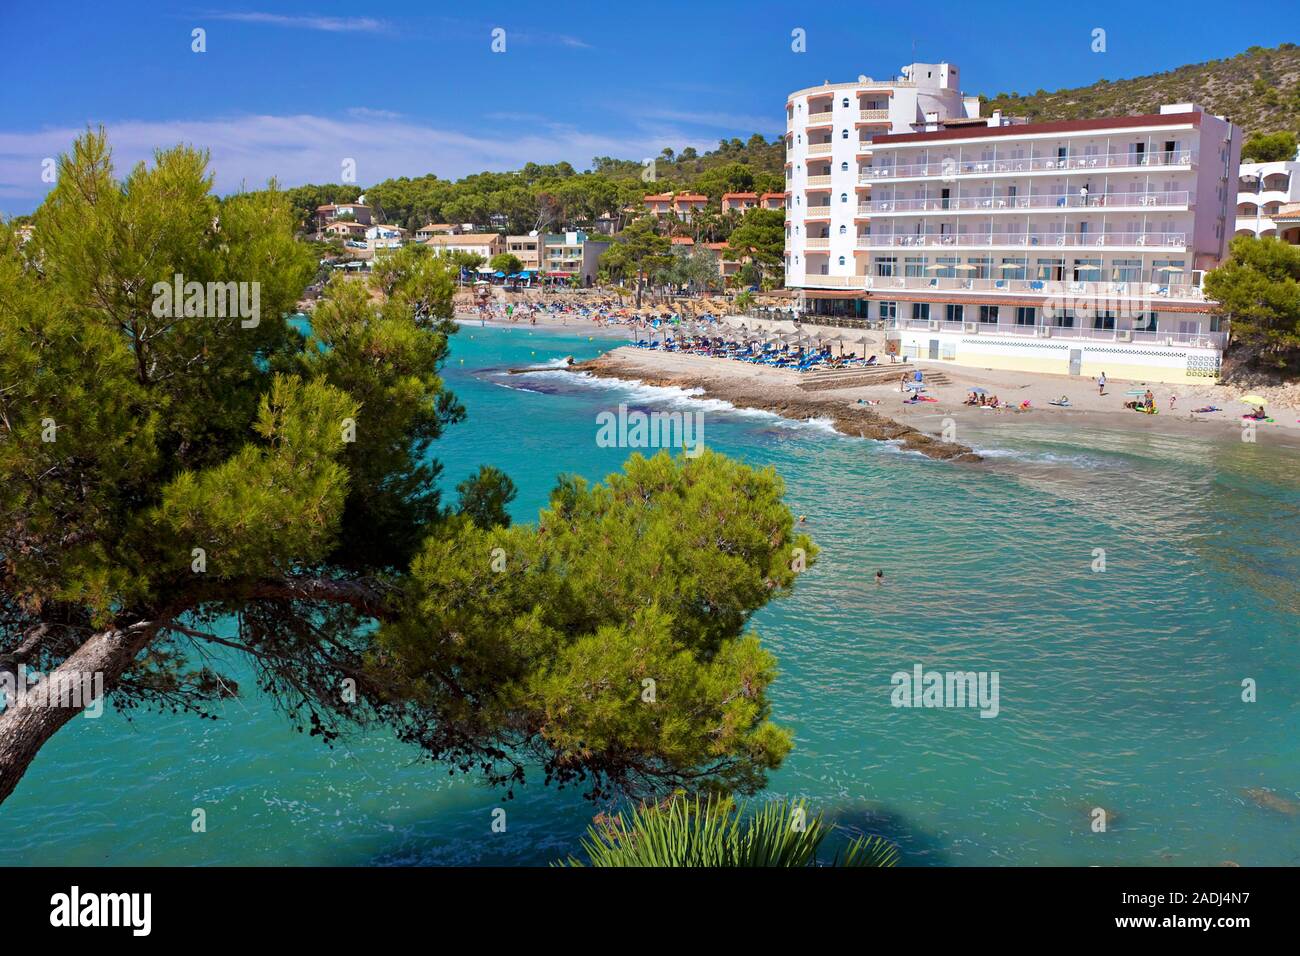 Badestrand Hotel Aquamarin, Sant Elm, San Telmo, Mallorca, Balearen, Spanien Stockfoto